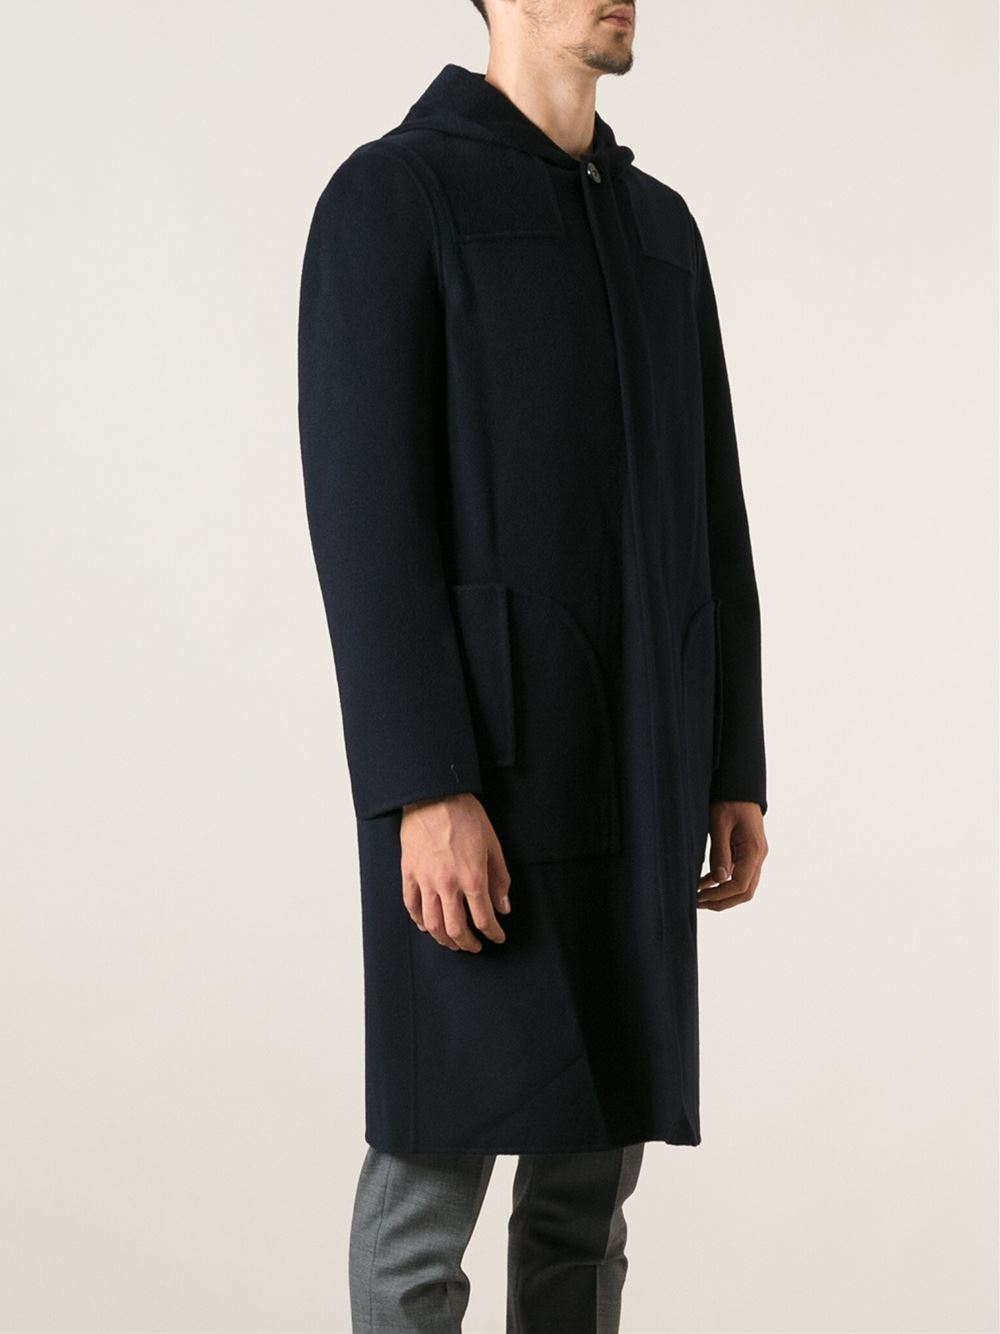 Acne Studios Milton Coat in Black for Men | Lyst